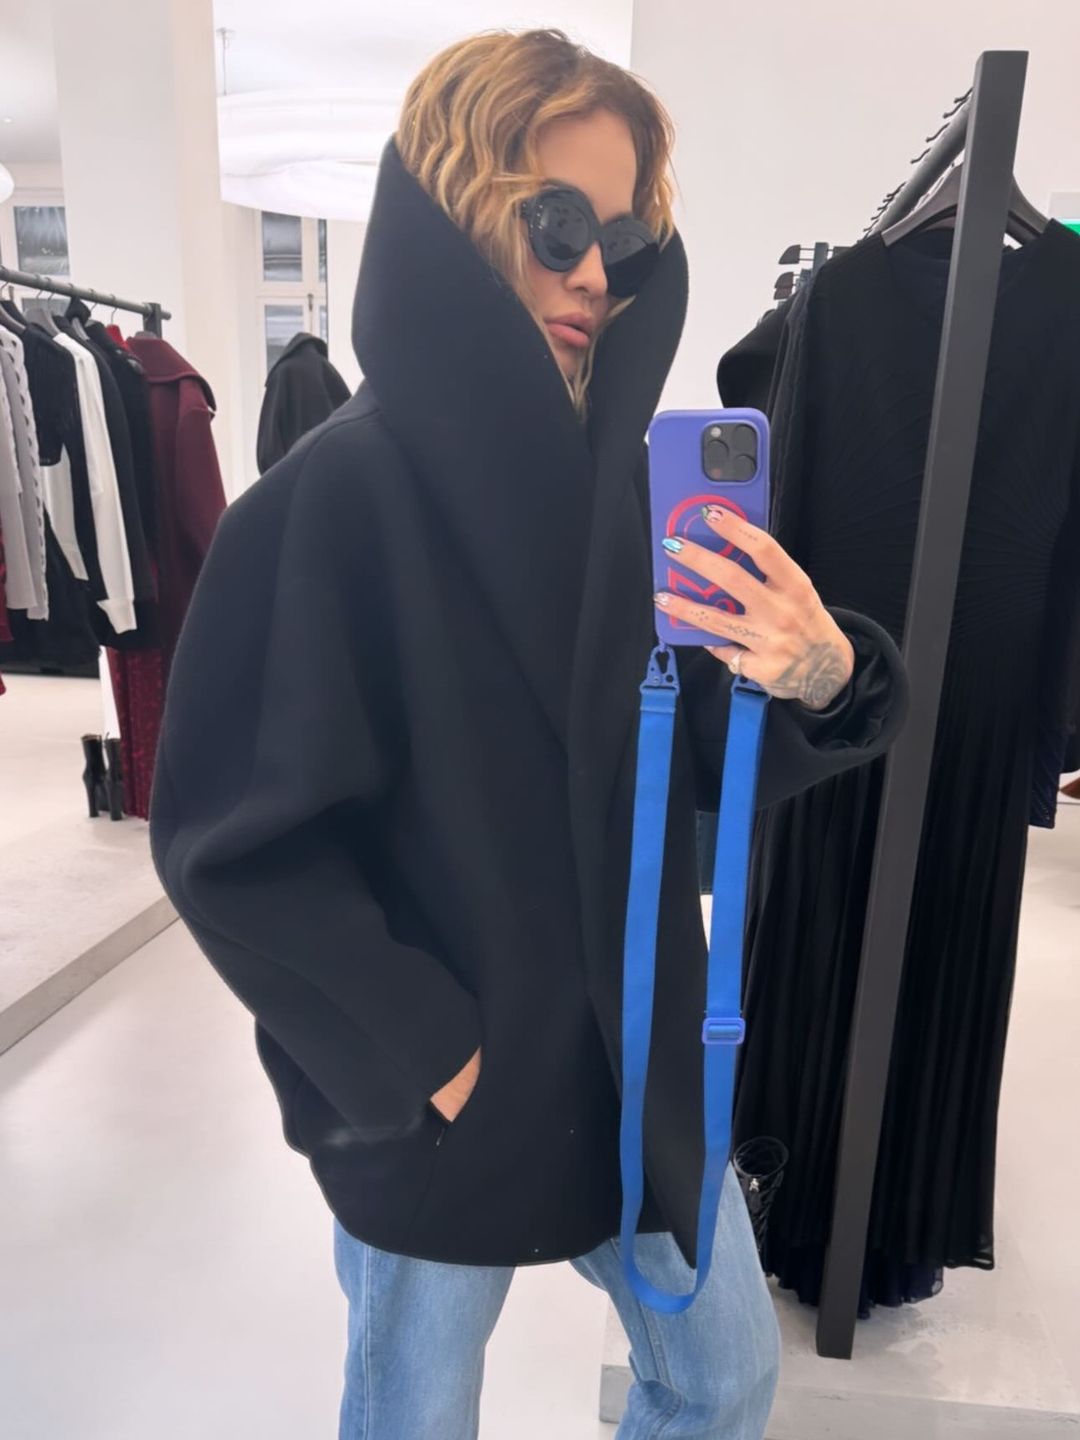 Rita Ora's Instagram story posing in front of a mirror wearing her new coat